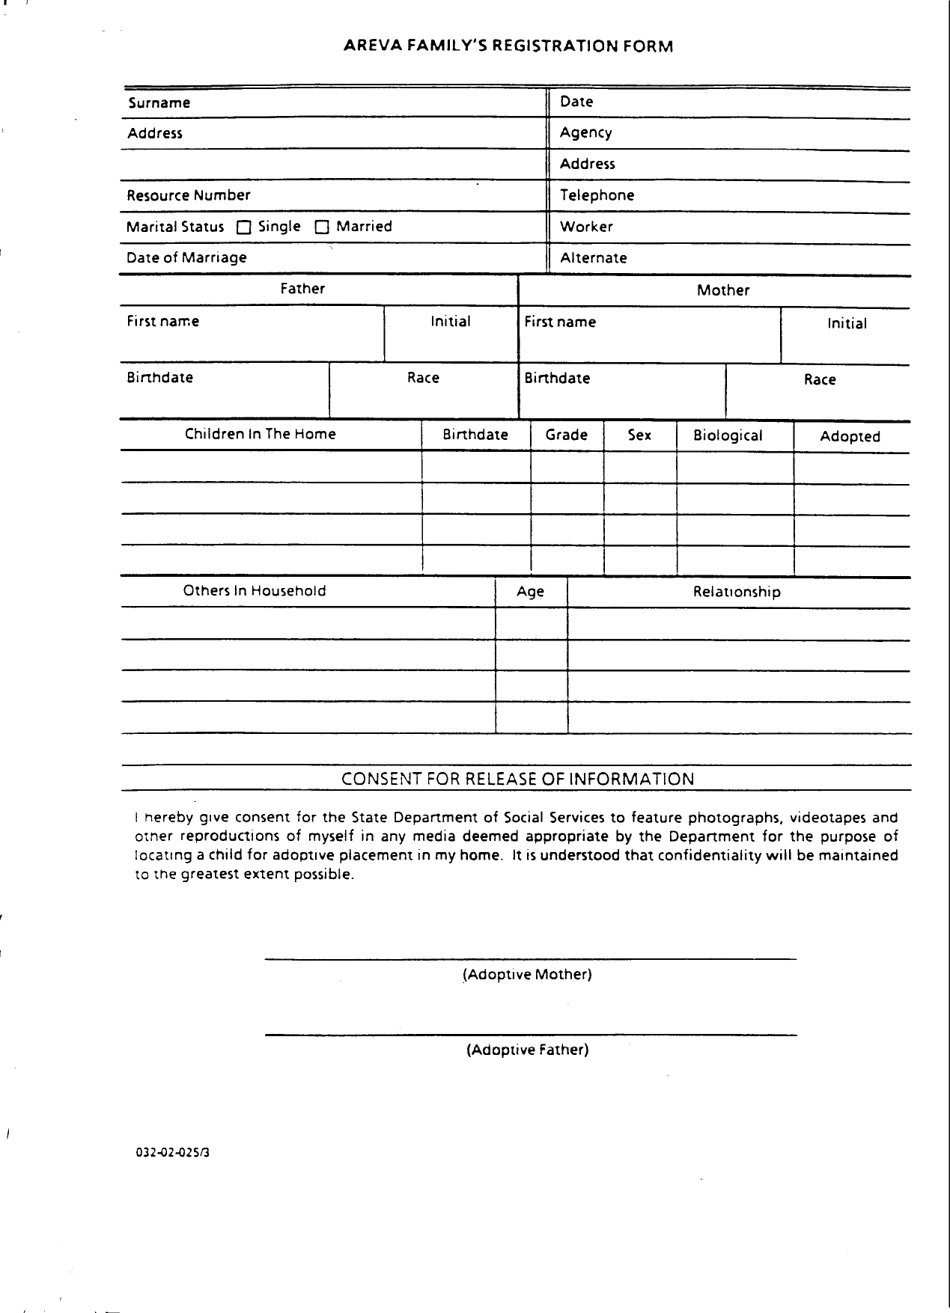 Form 032-02-025 / 3 Areva Familys Registration Form - Virginia, Page 1